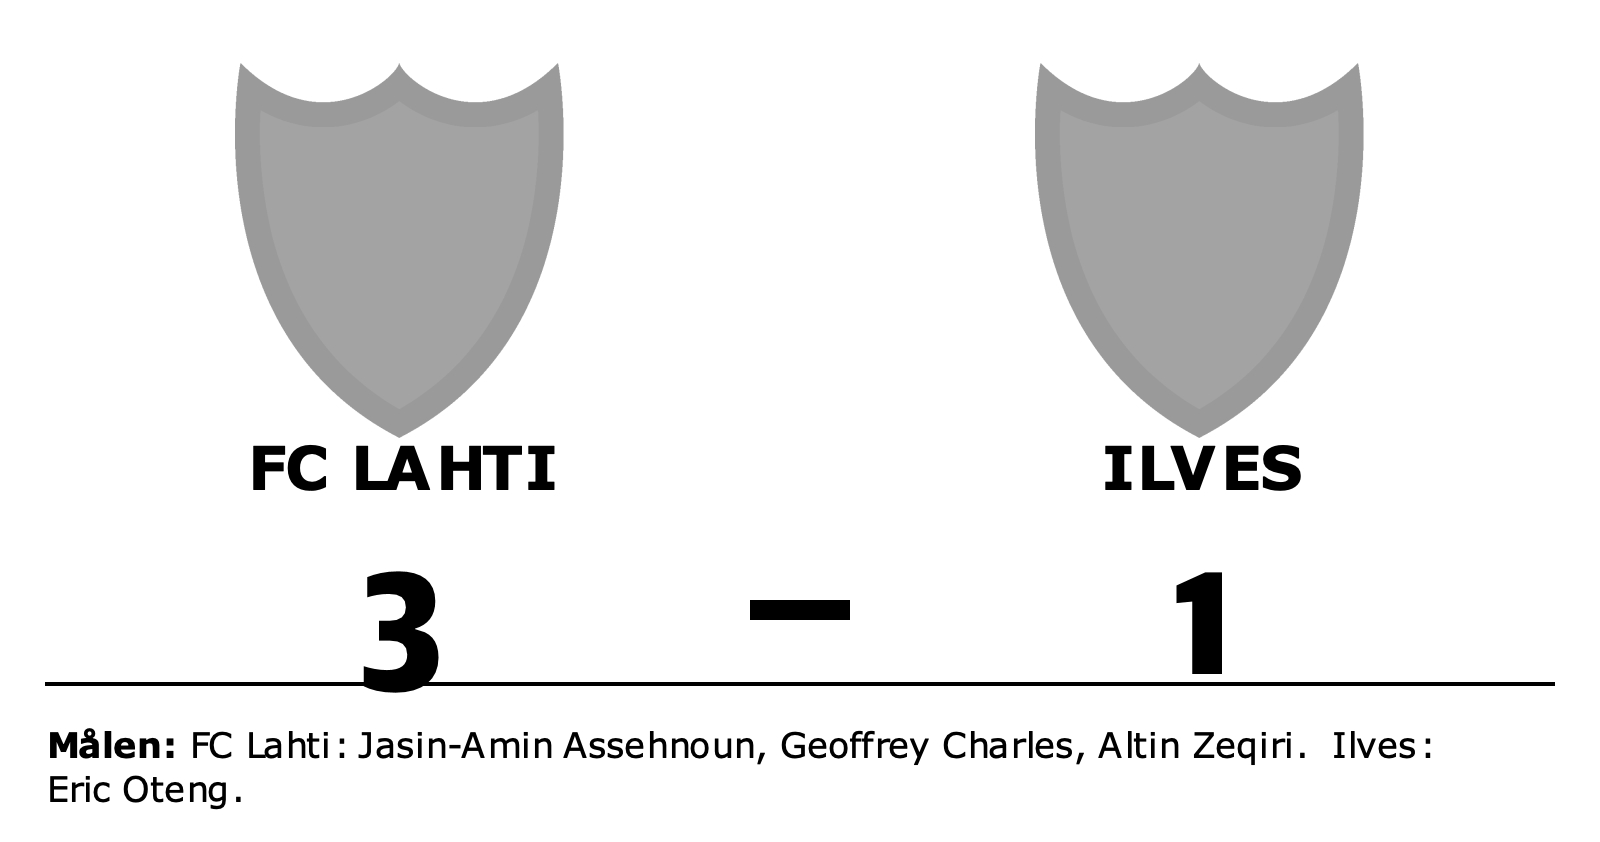 FC Lahti vann mot Ilves